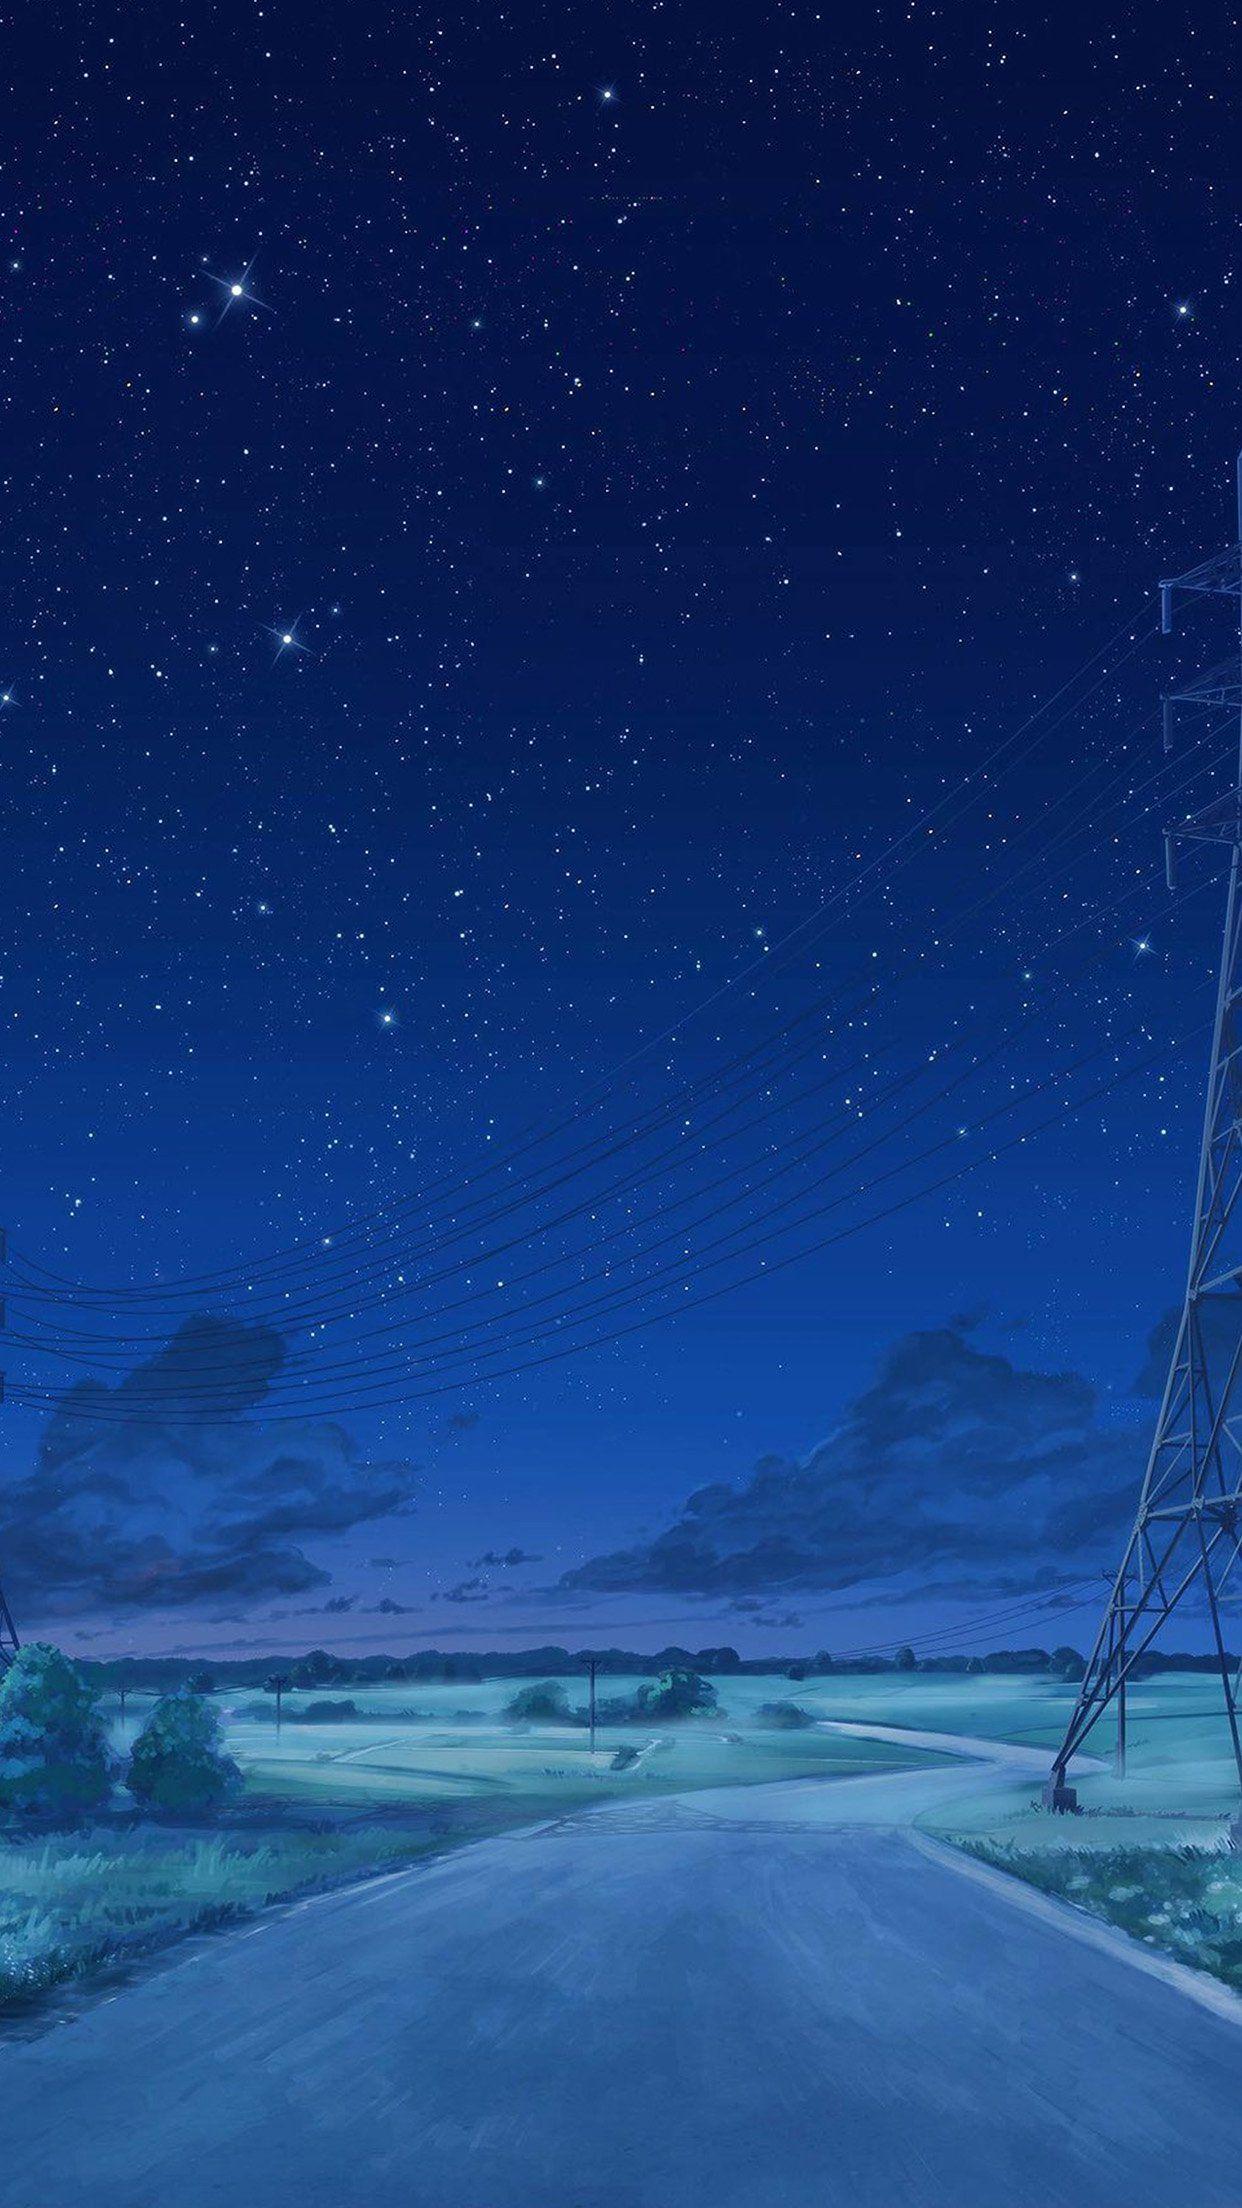 Arseniy Chebynkin Night Sky Star Blue Illustration Art Anime Android wallpaper. Night sky art, Anime scenery wallpaper, Scenery wallpaper